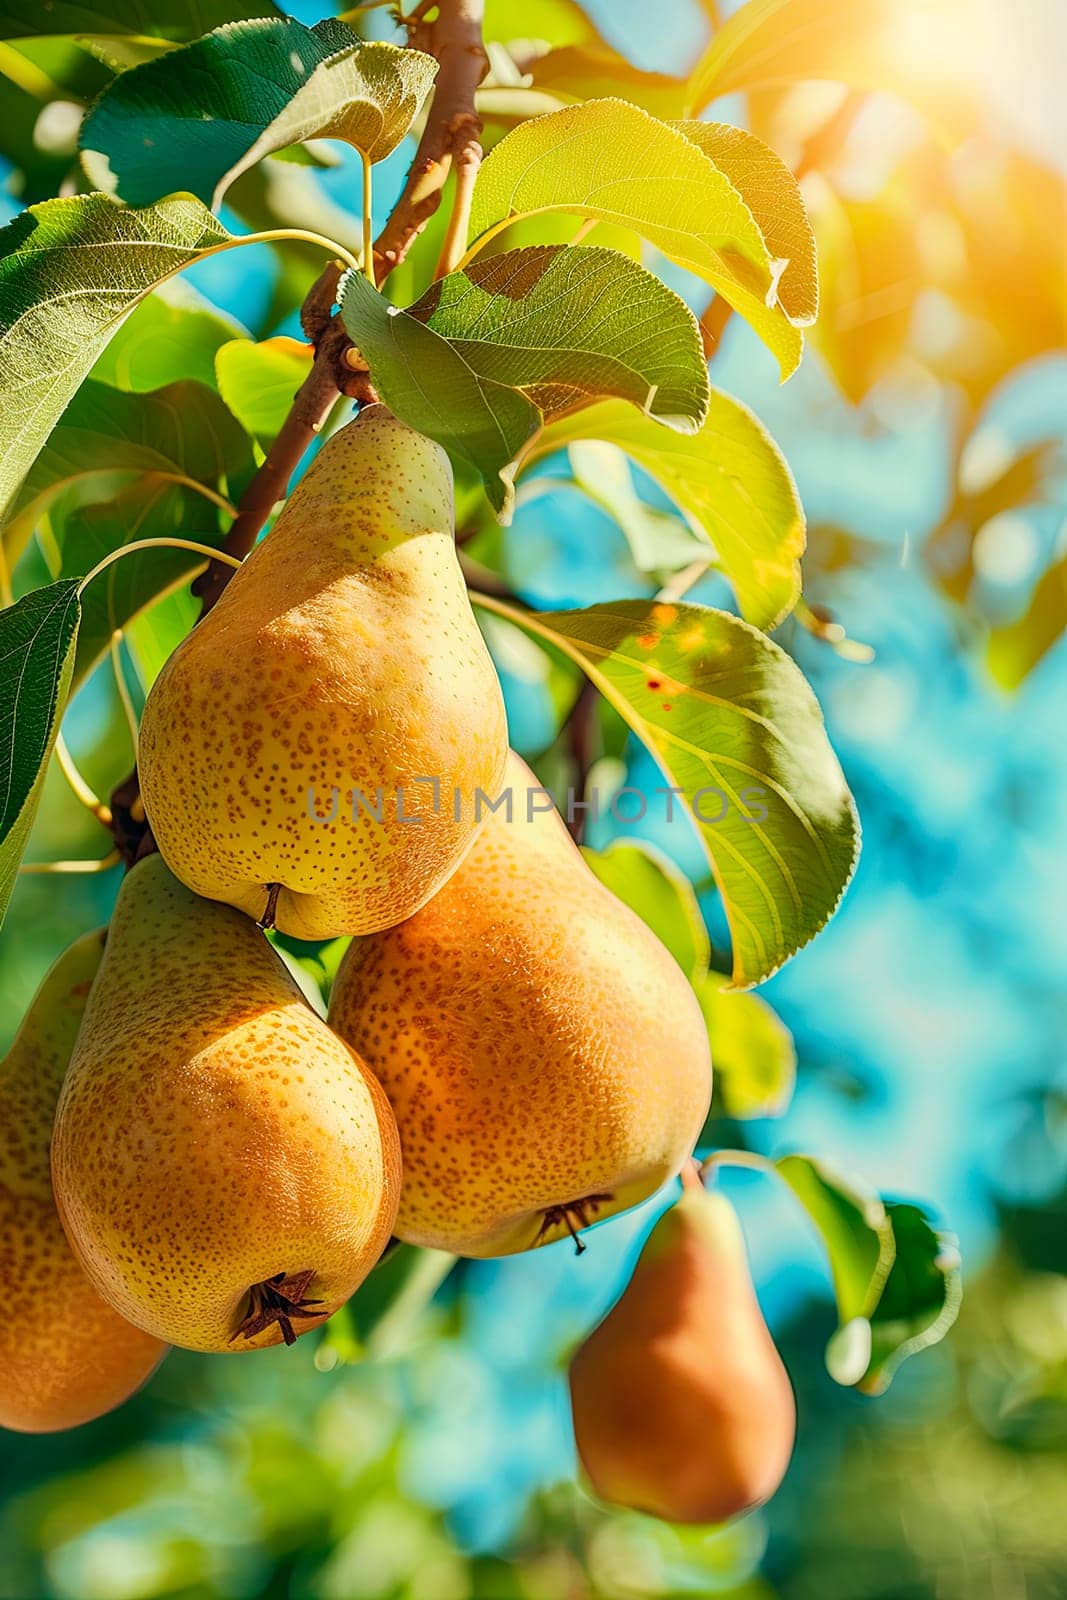 Pear harvest in the garden. selective focus. by yanadjana